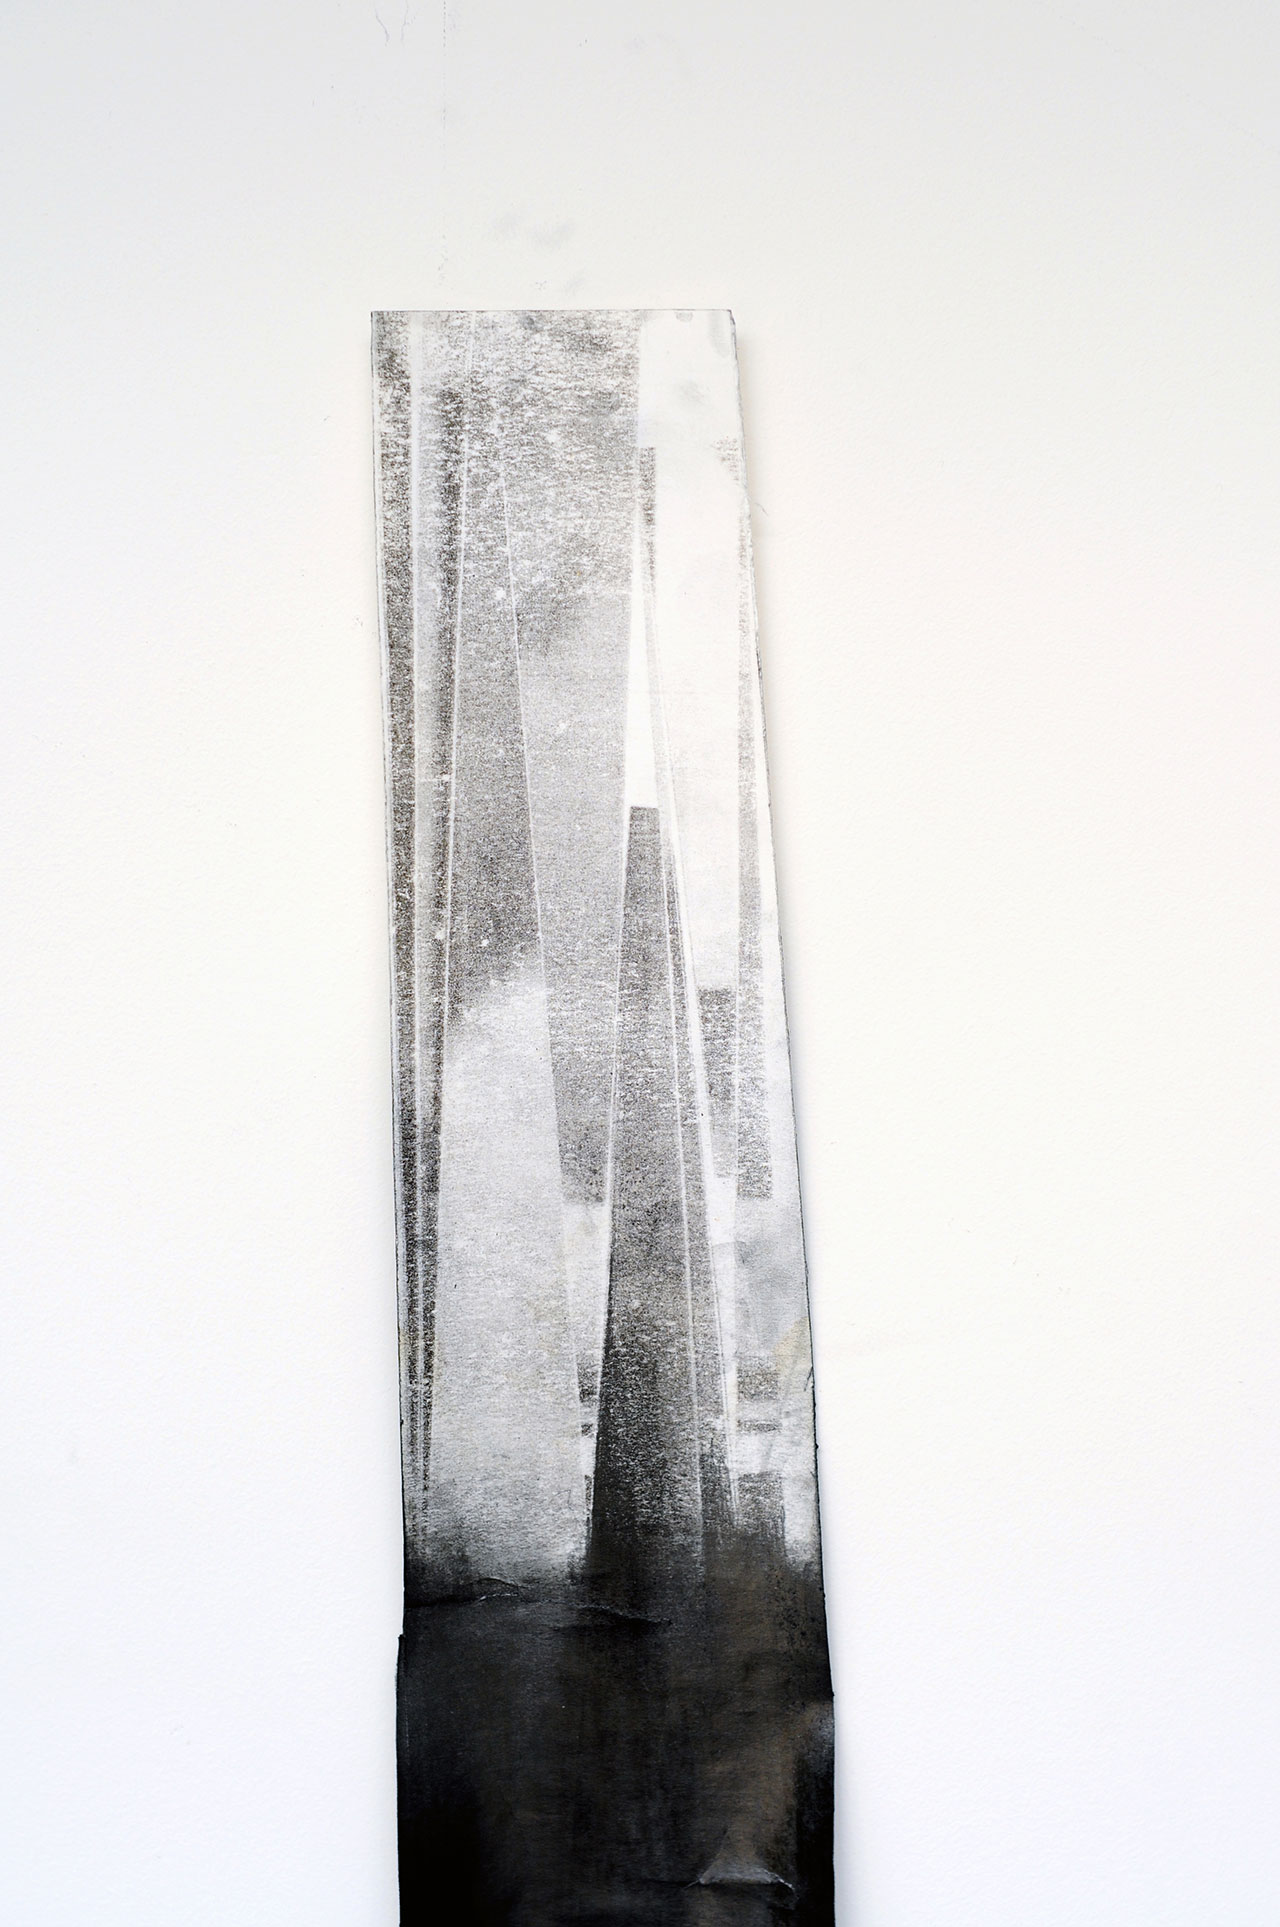 Despina Flessa, Folding landscape, graphite print and graphite on paper, 83,5 x 12 cm, 2015. Photo by Costas Christou.